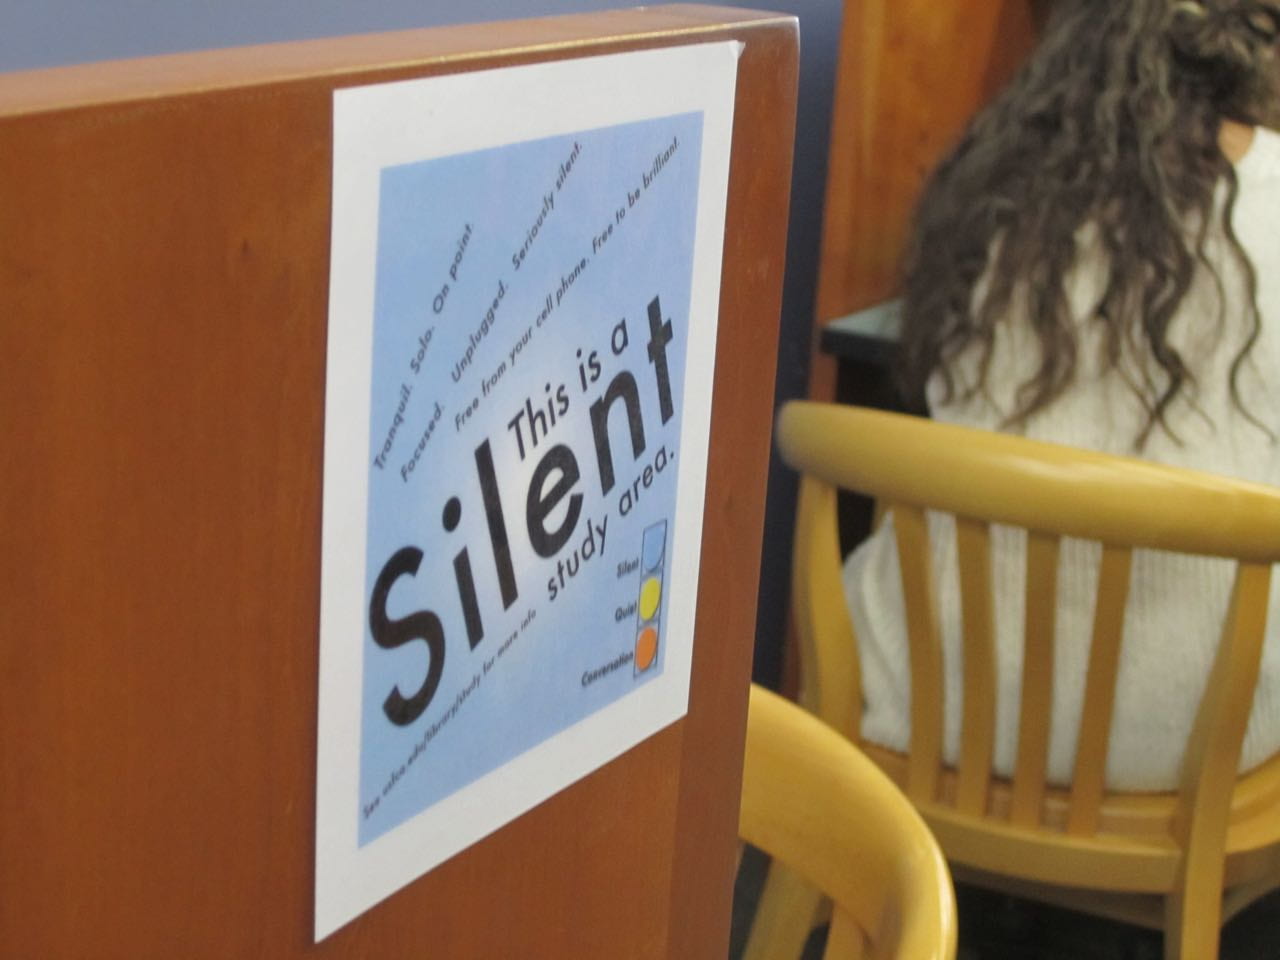 Silent study sign on a desk